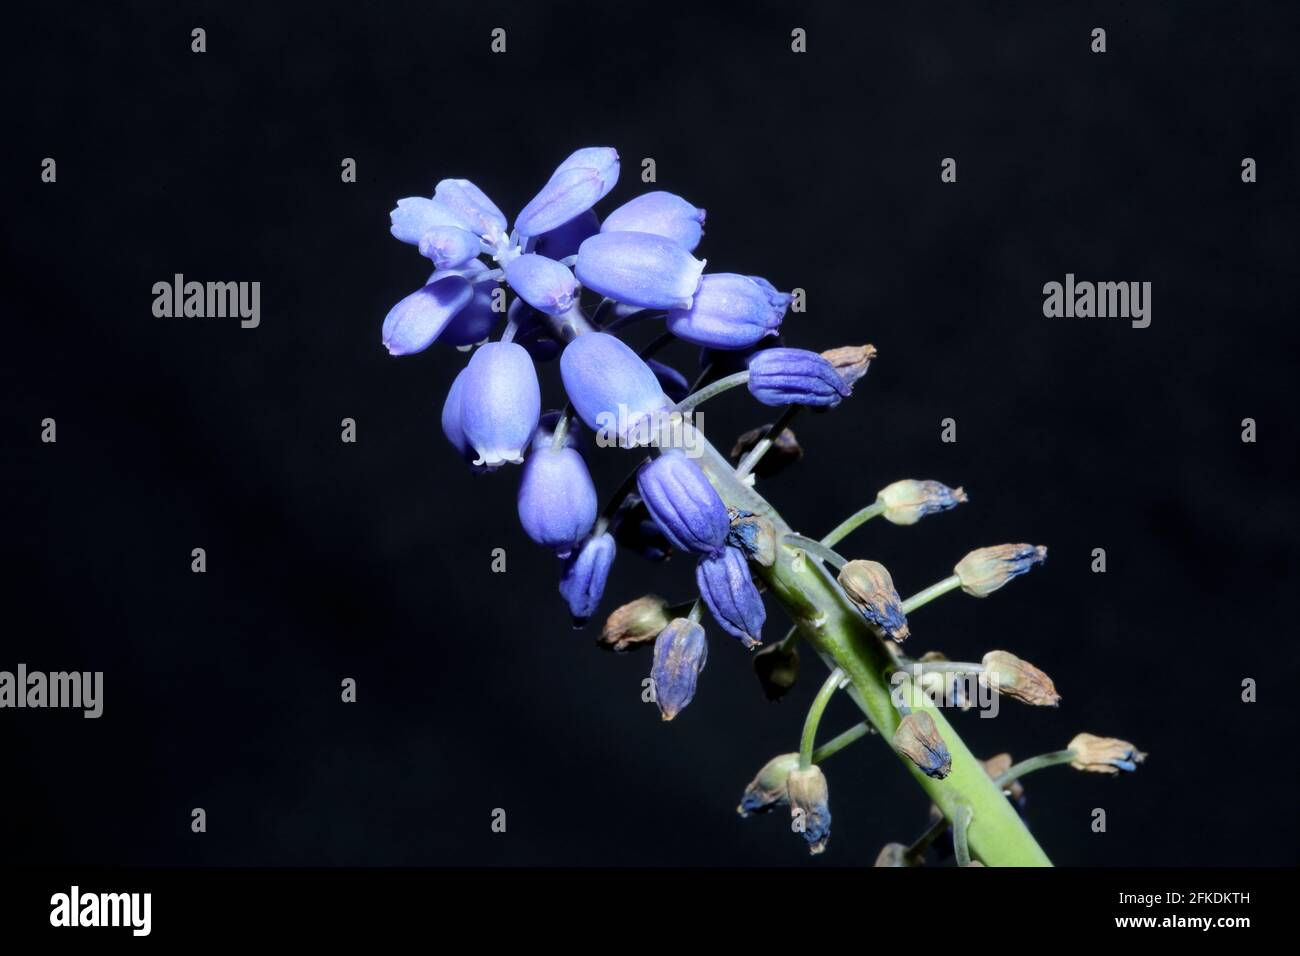 Blue small flower close up Muscari neglectum family asparagaceae modern background high quality big size botanical prints Stock Photo